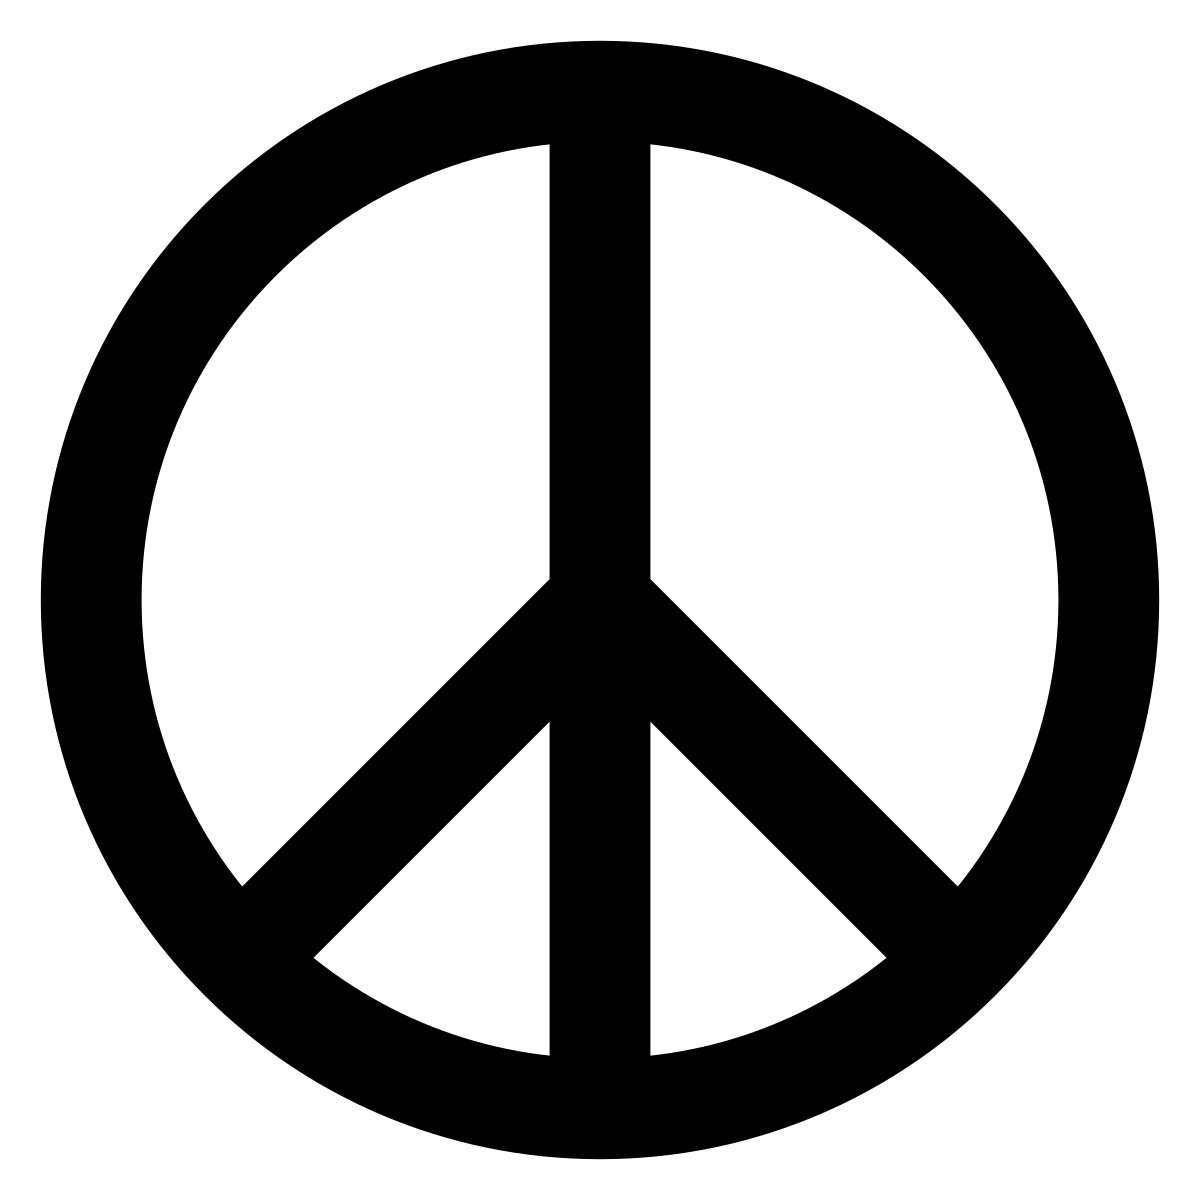 Google Sign Logo - Peace symbols